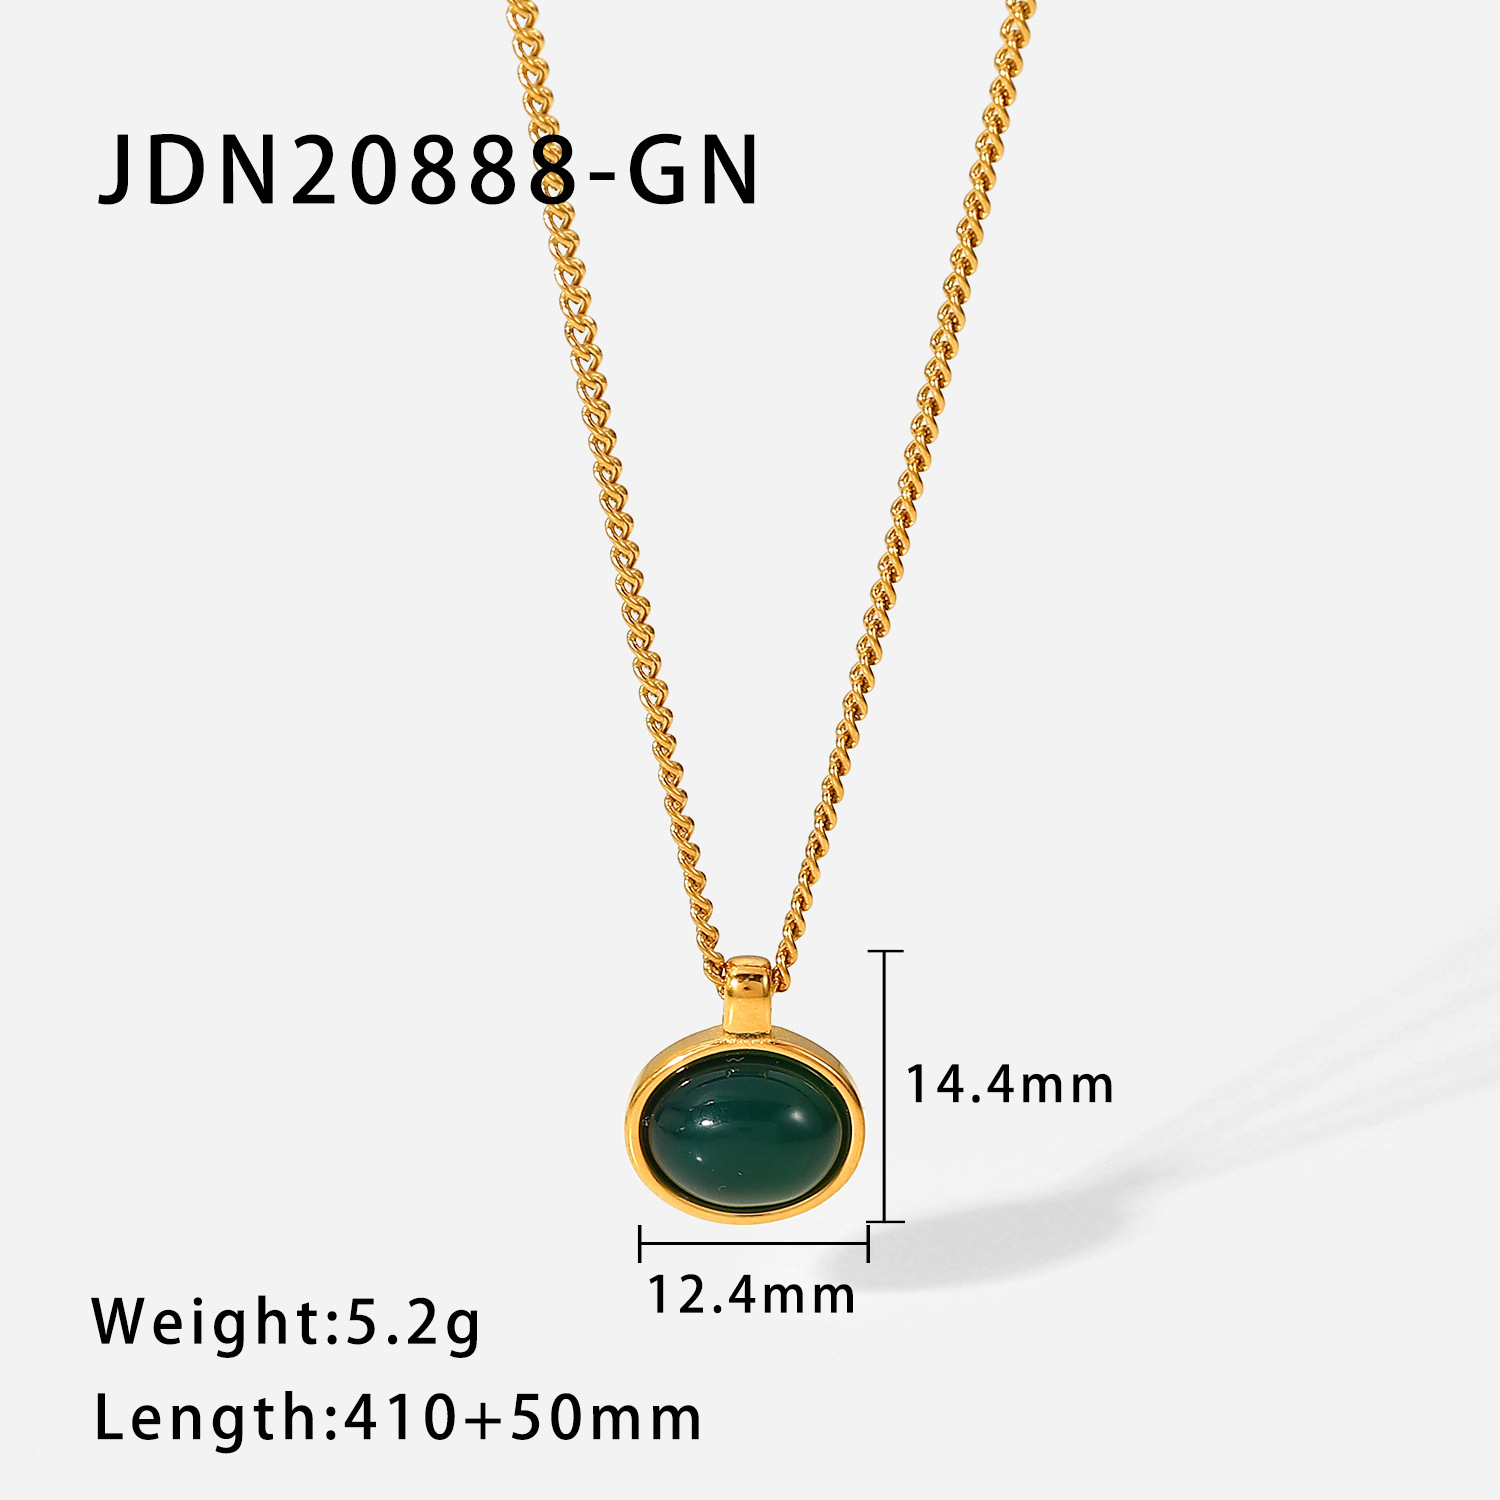 2:JDN20888-GN